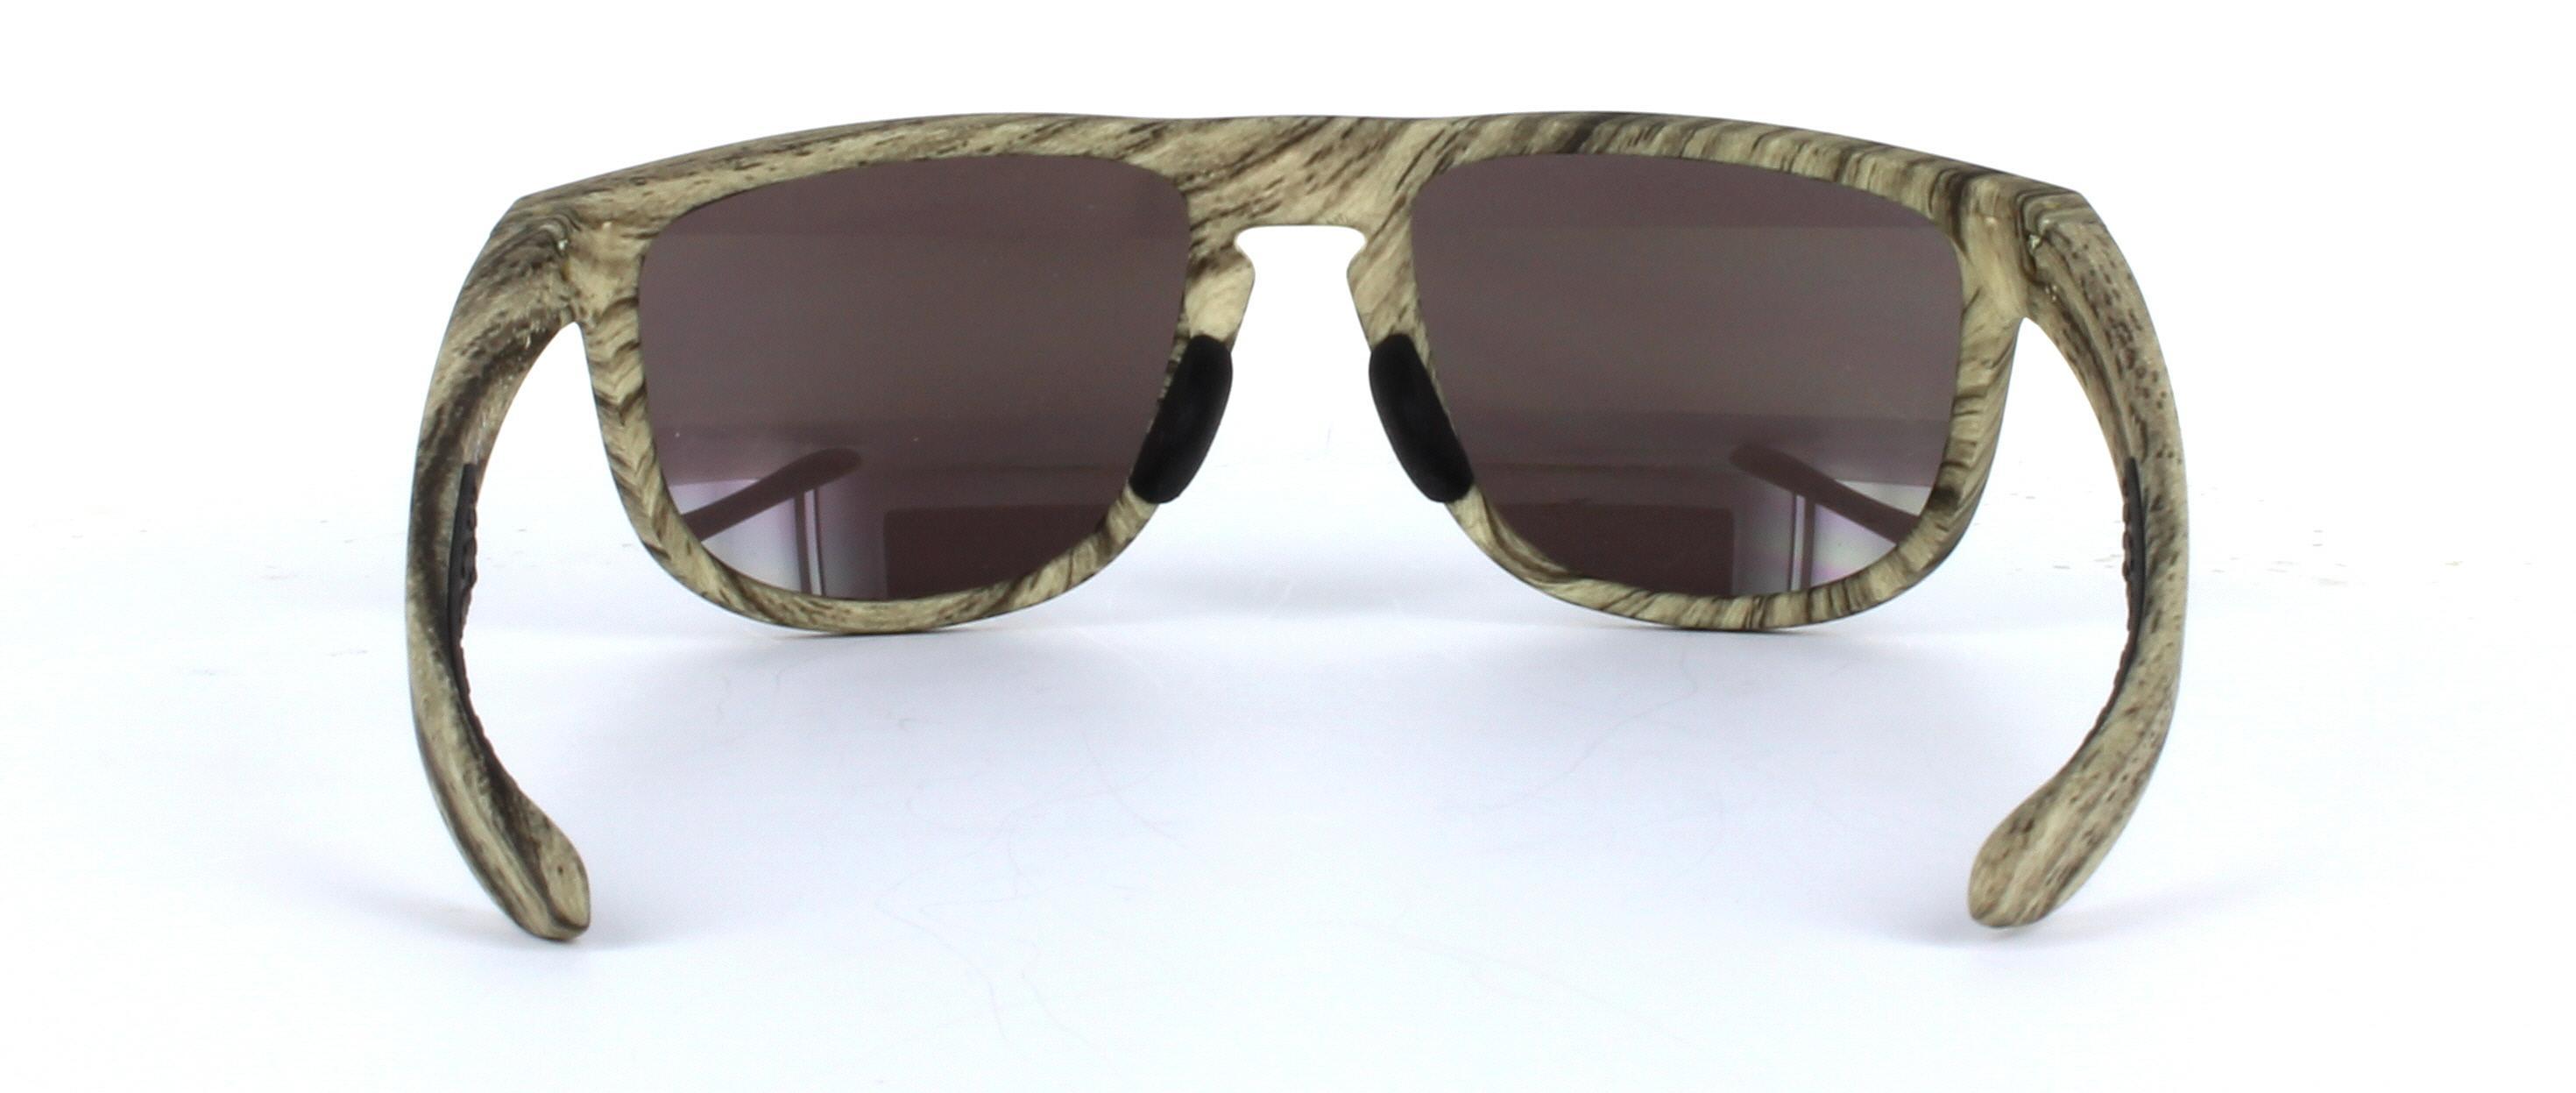 Oakley (O9379) Light Brown Full Rim Plastic Sunglasses - Image View 3